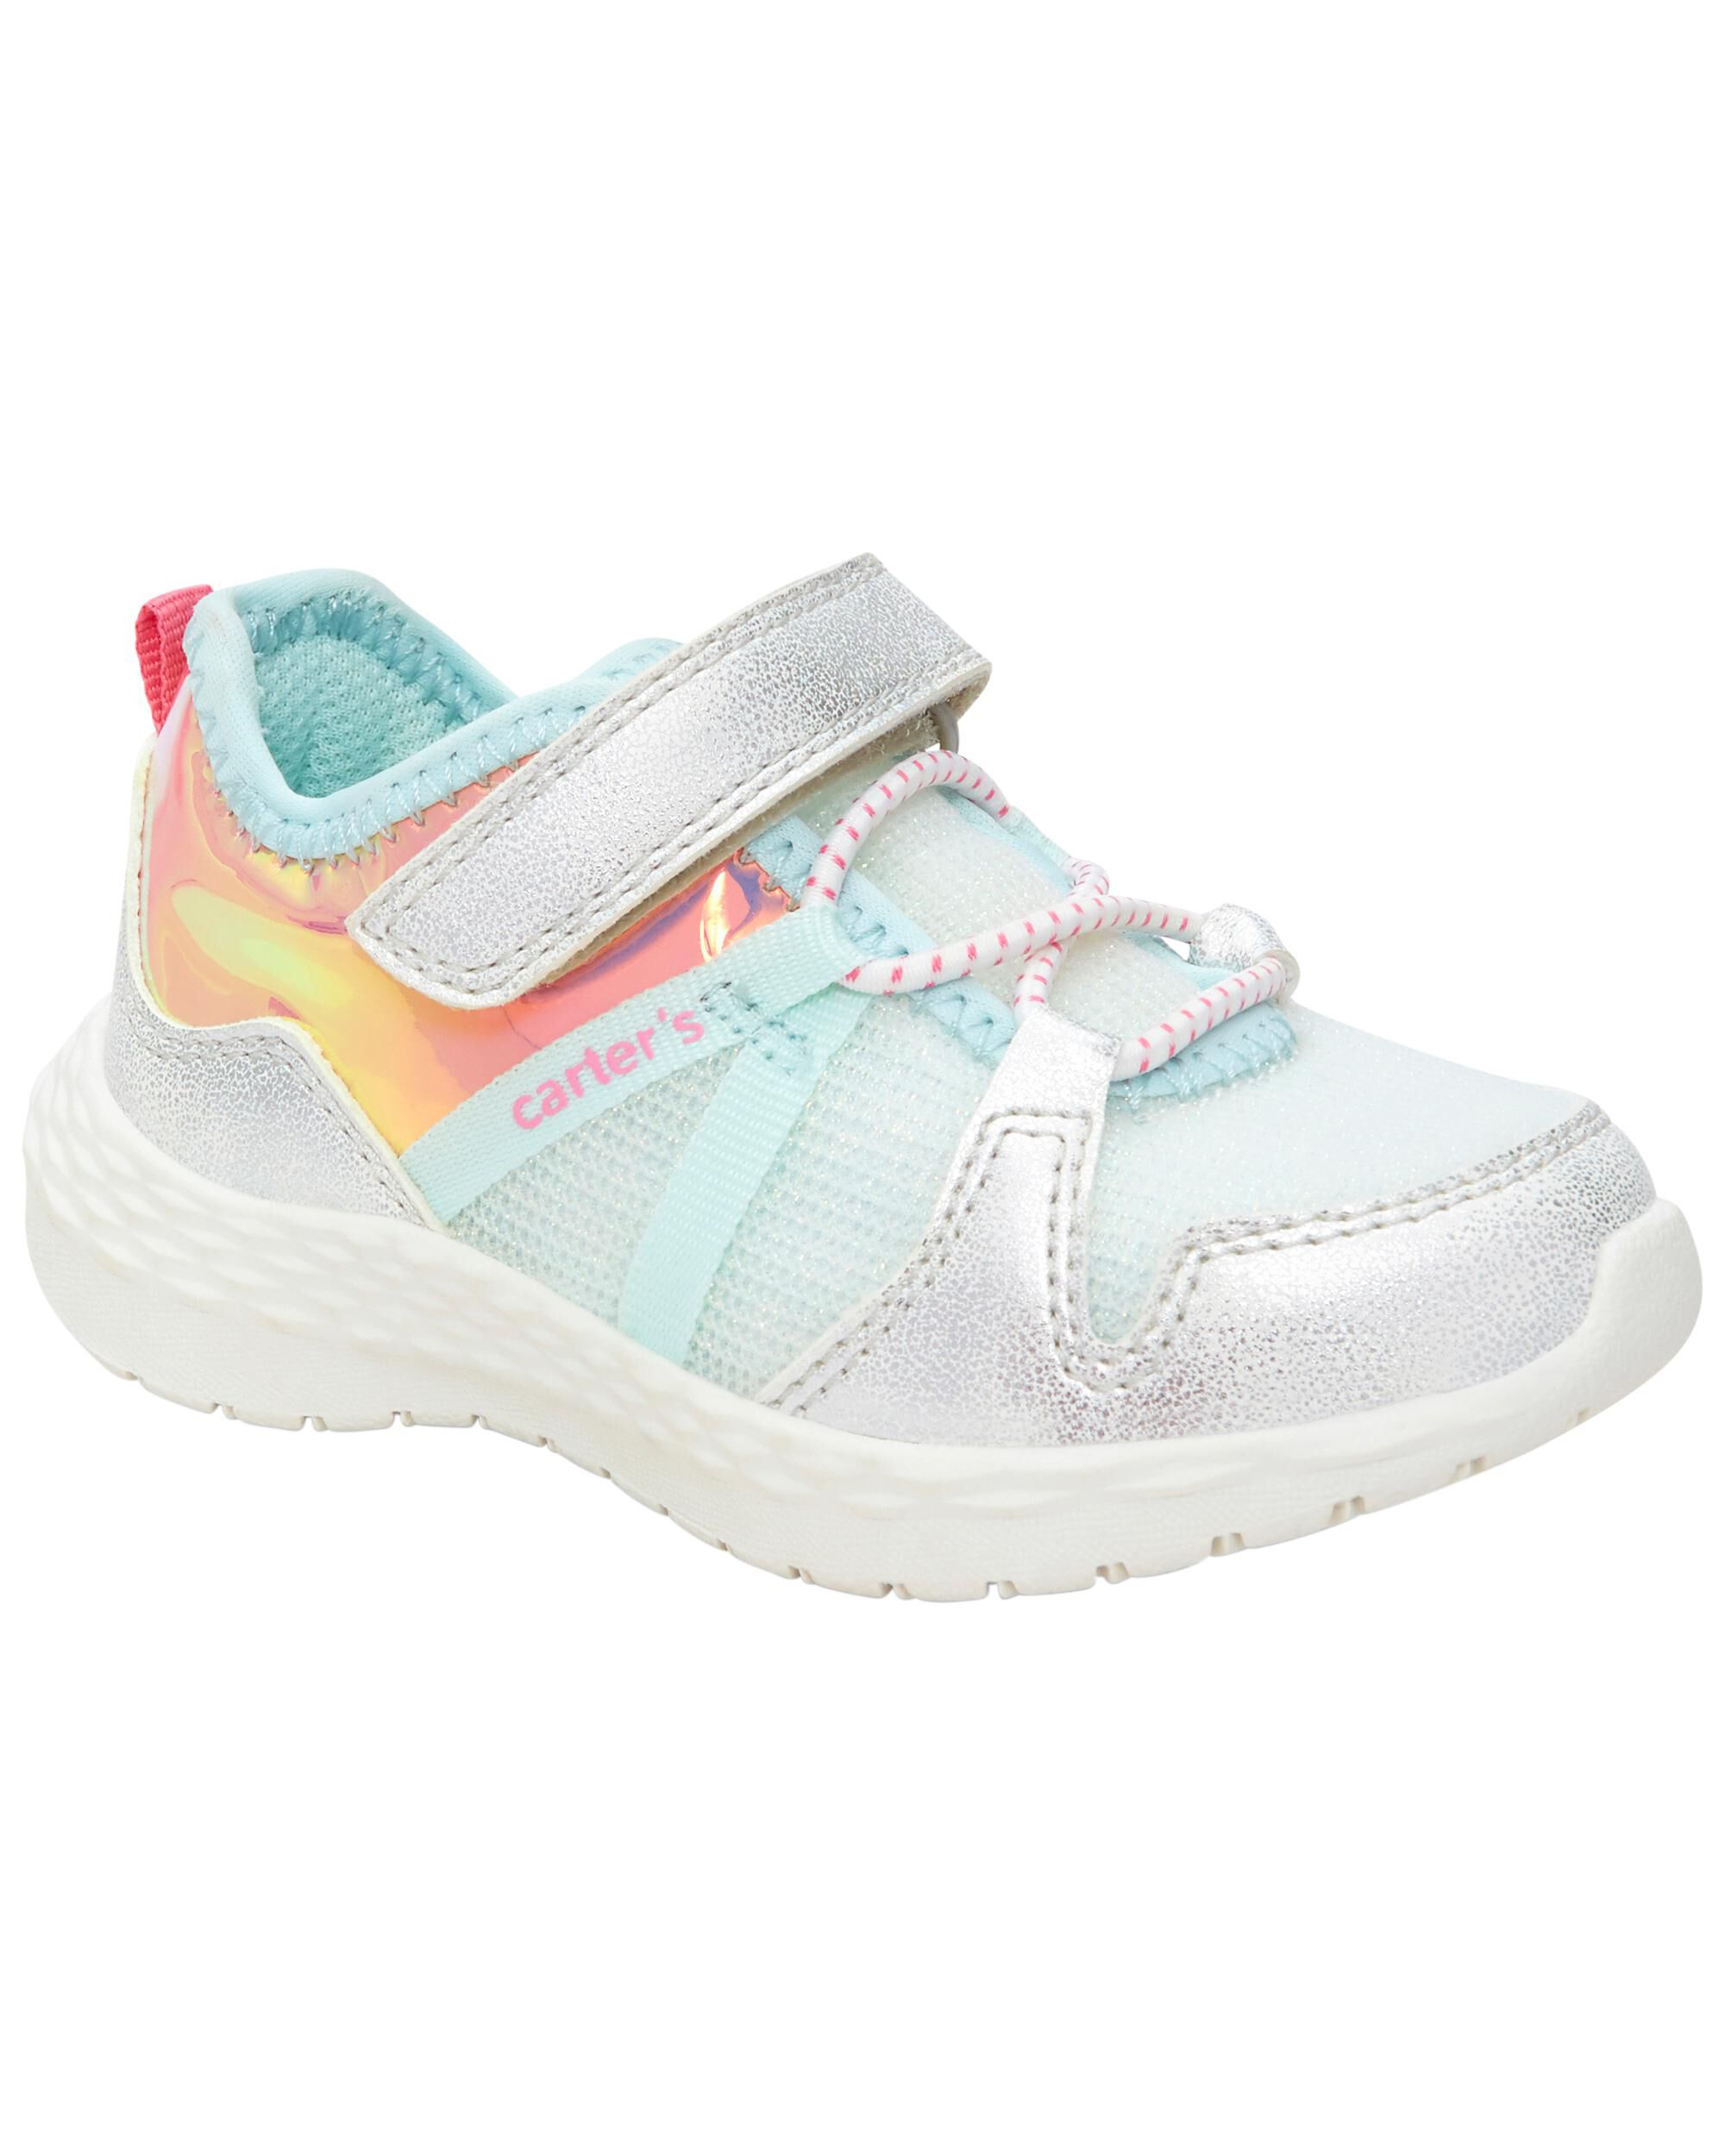 Toddler Carters Iridescent Sneakers